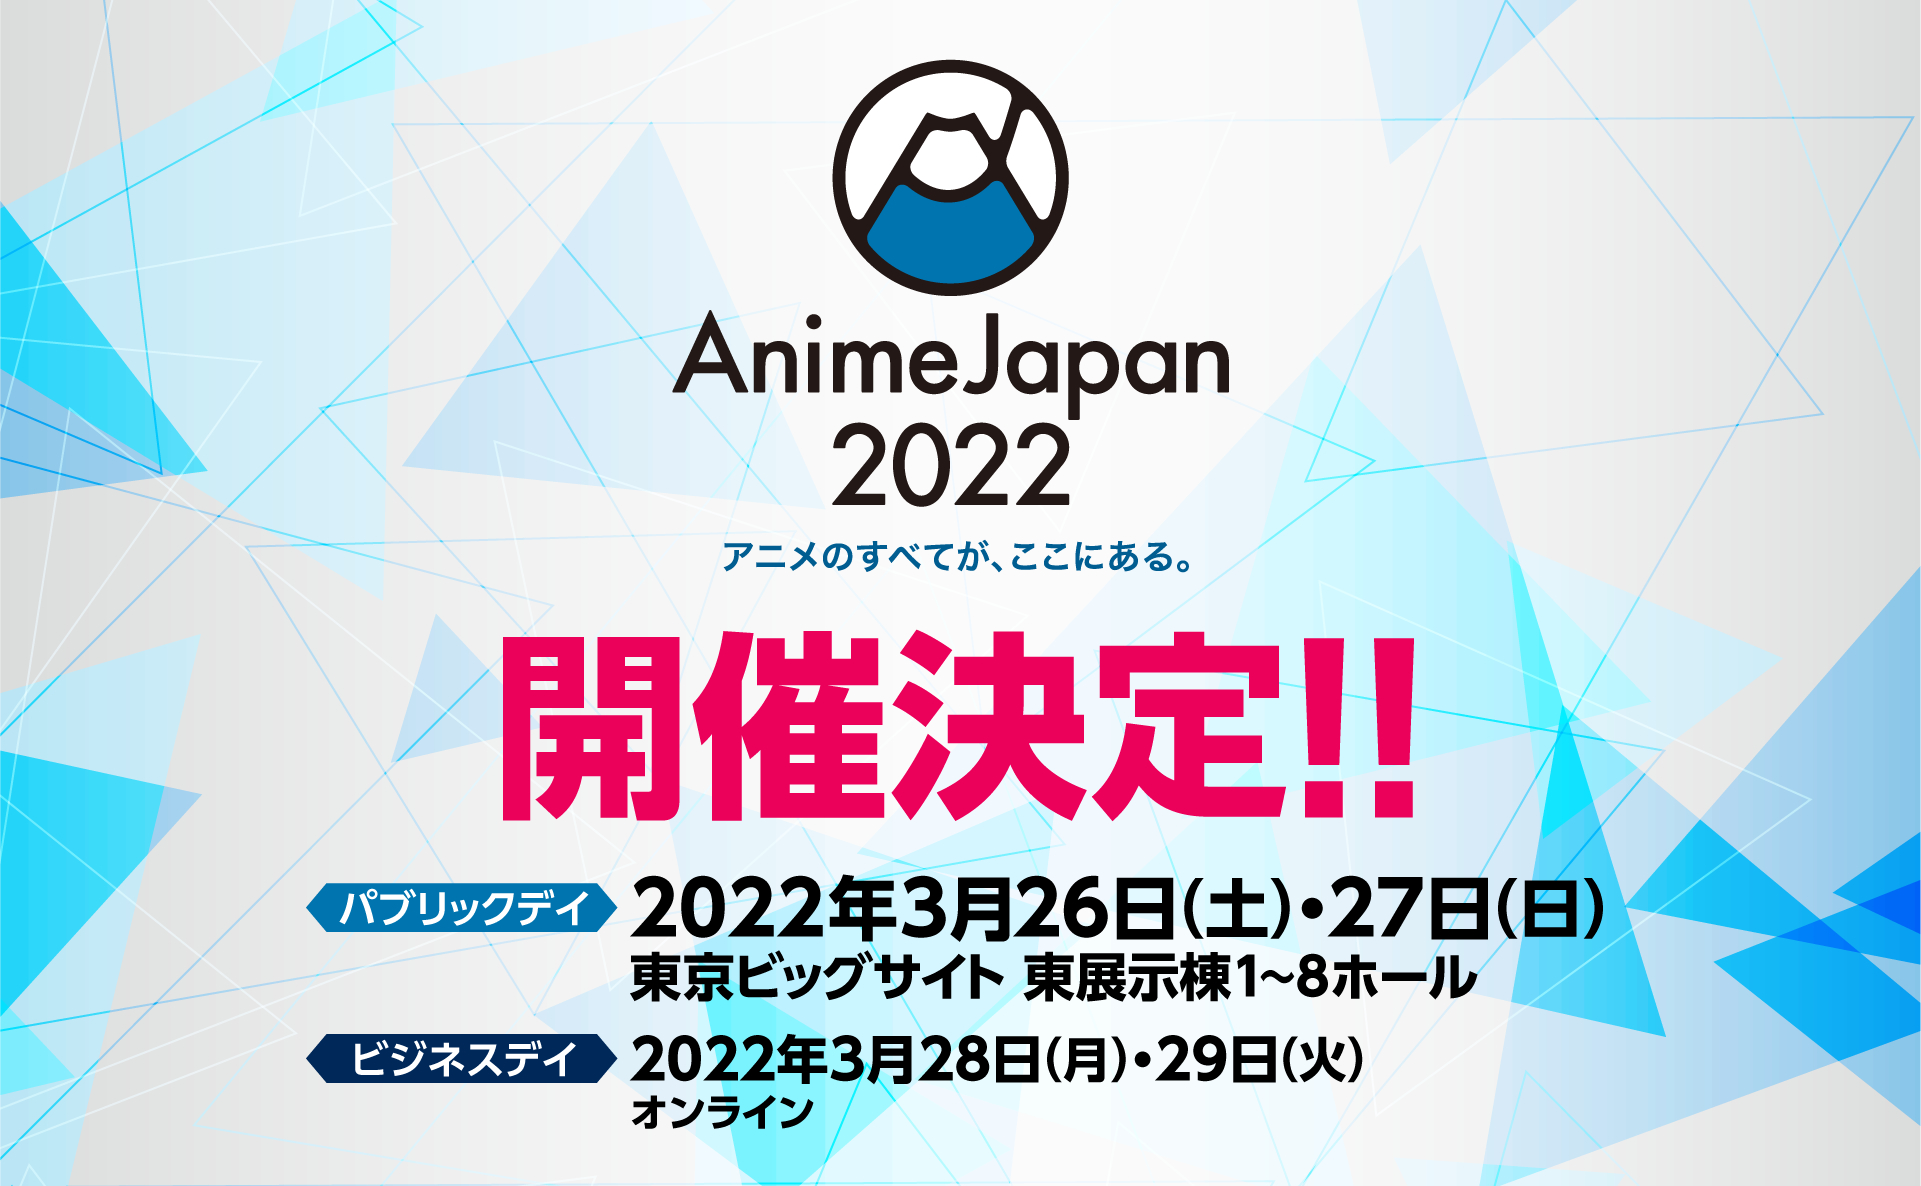 『AnimeJapan 2022』バナー